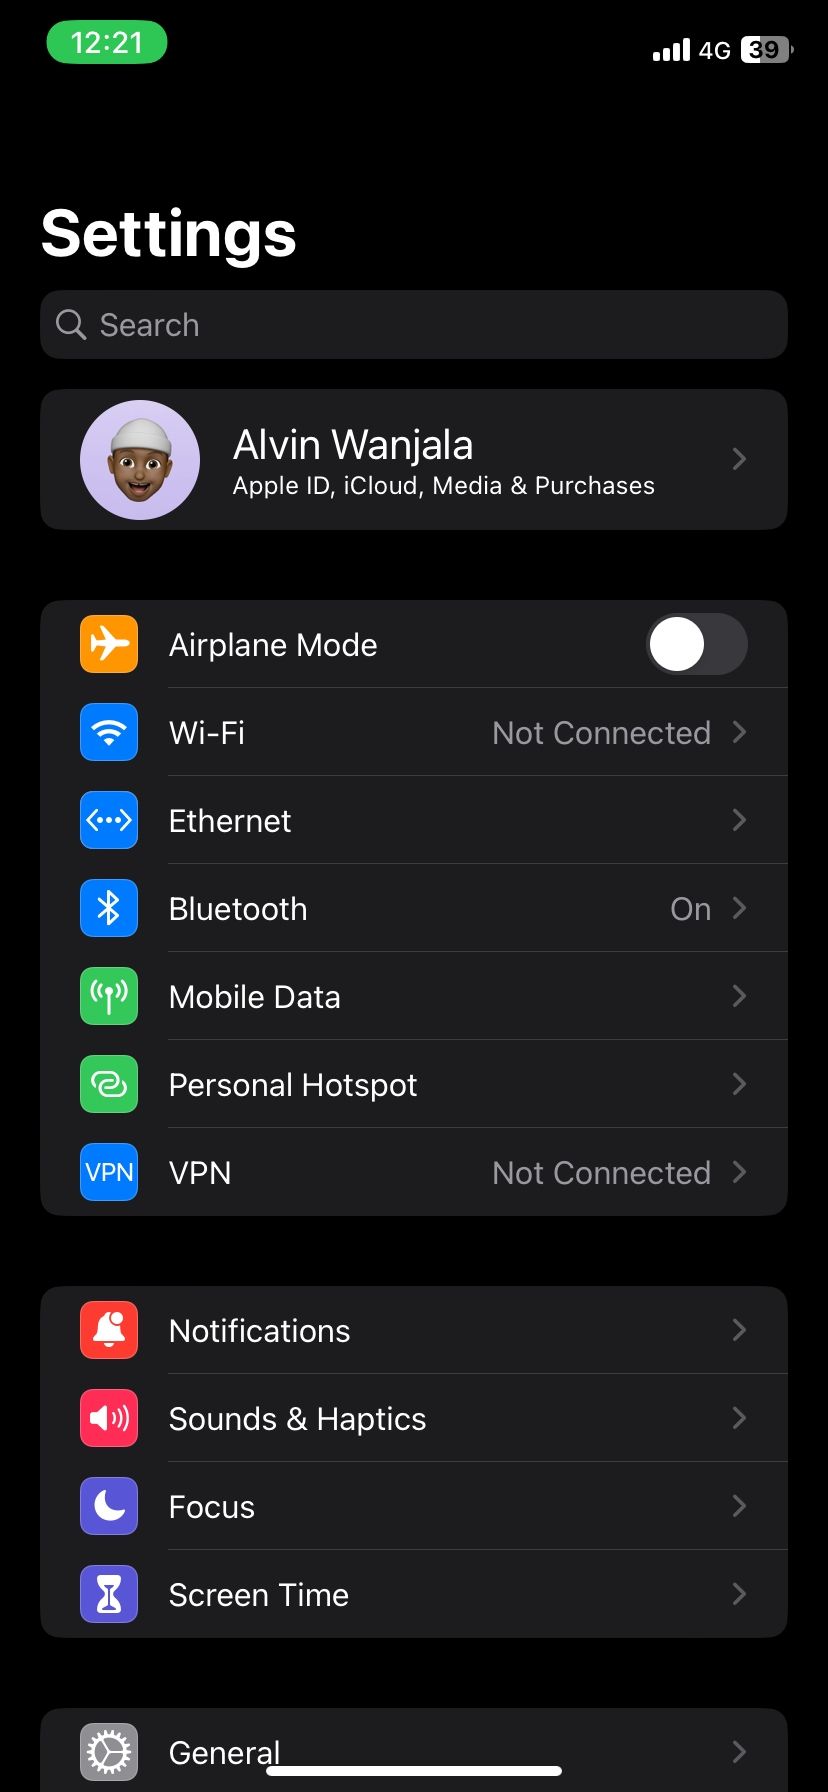 Internet served via Bluetooth on iPhone